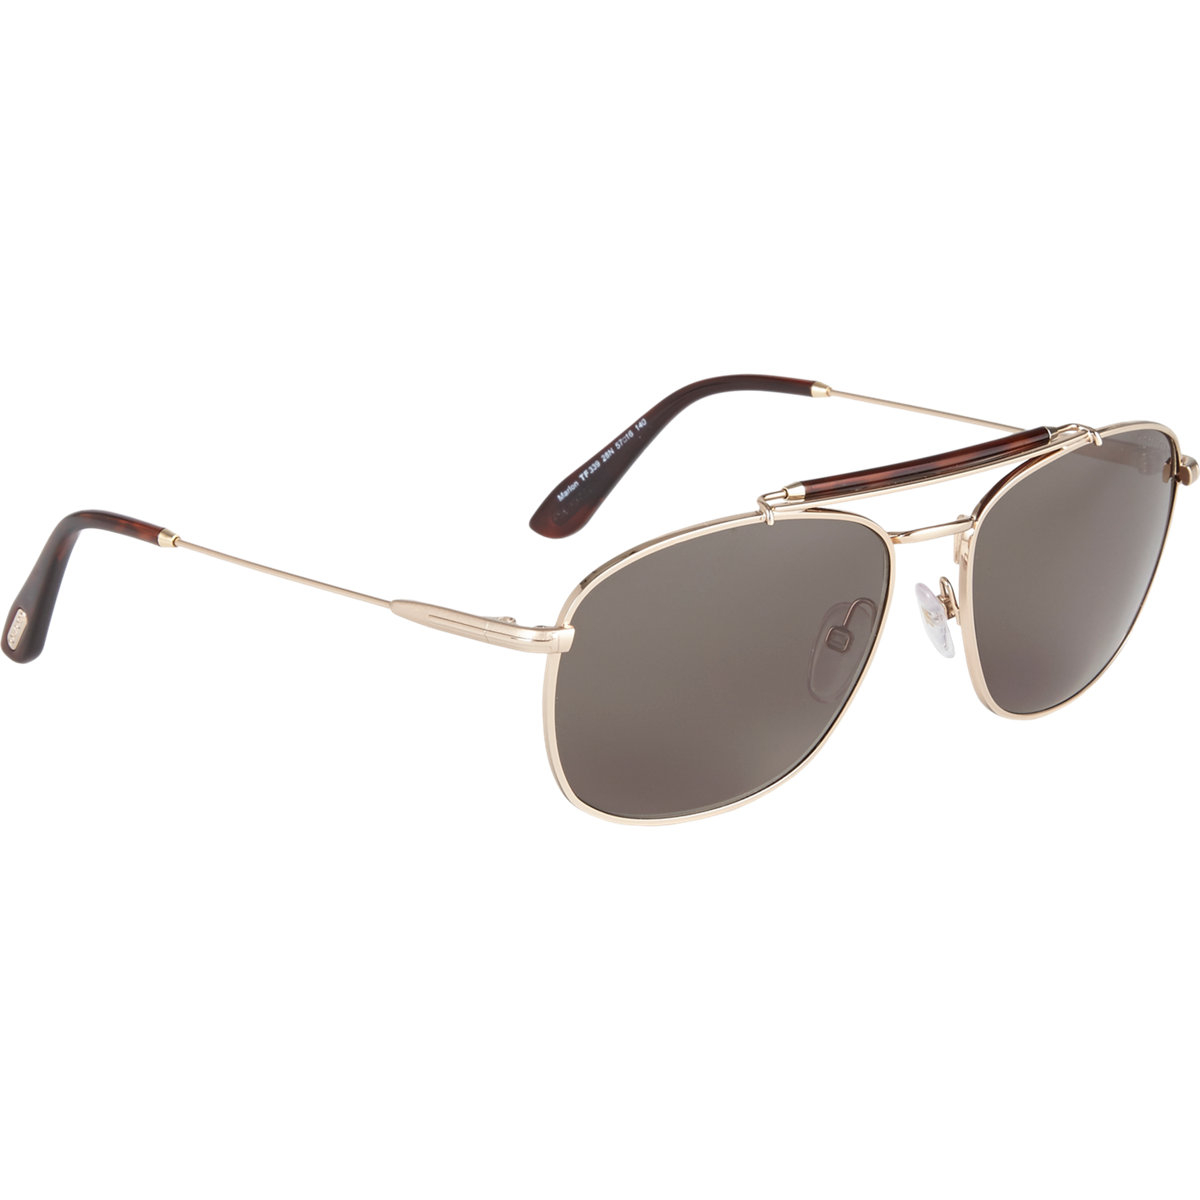 Tom Ford Marlon Sunglasses In Metallic For Men Lyst 